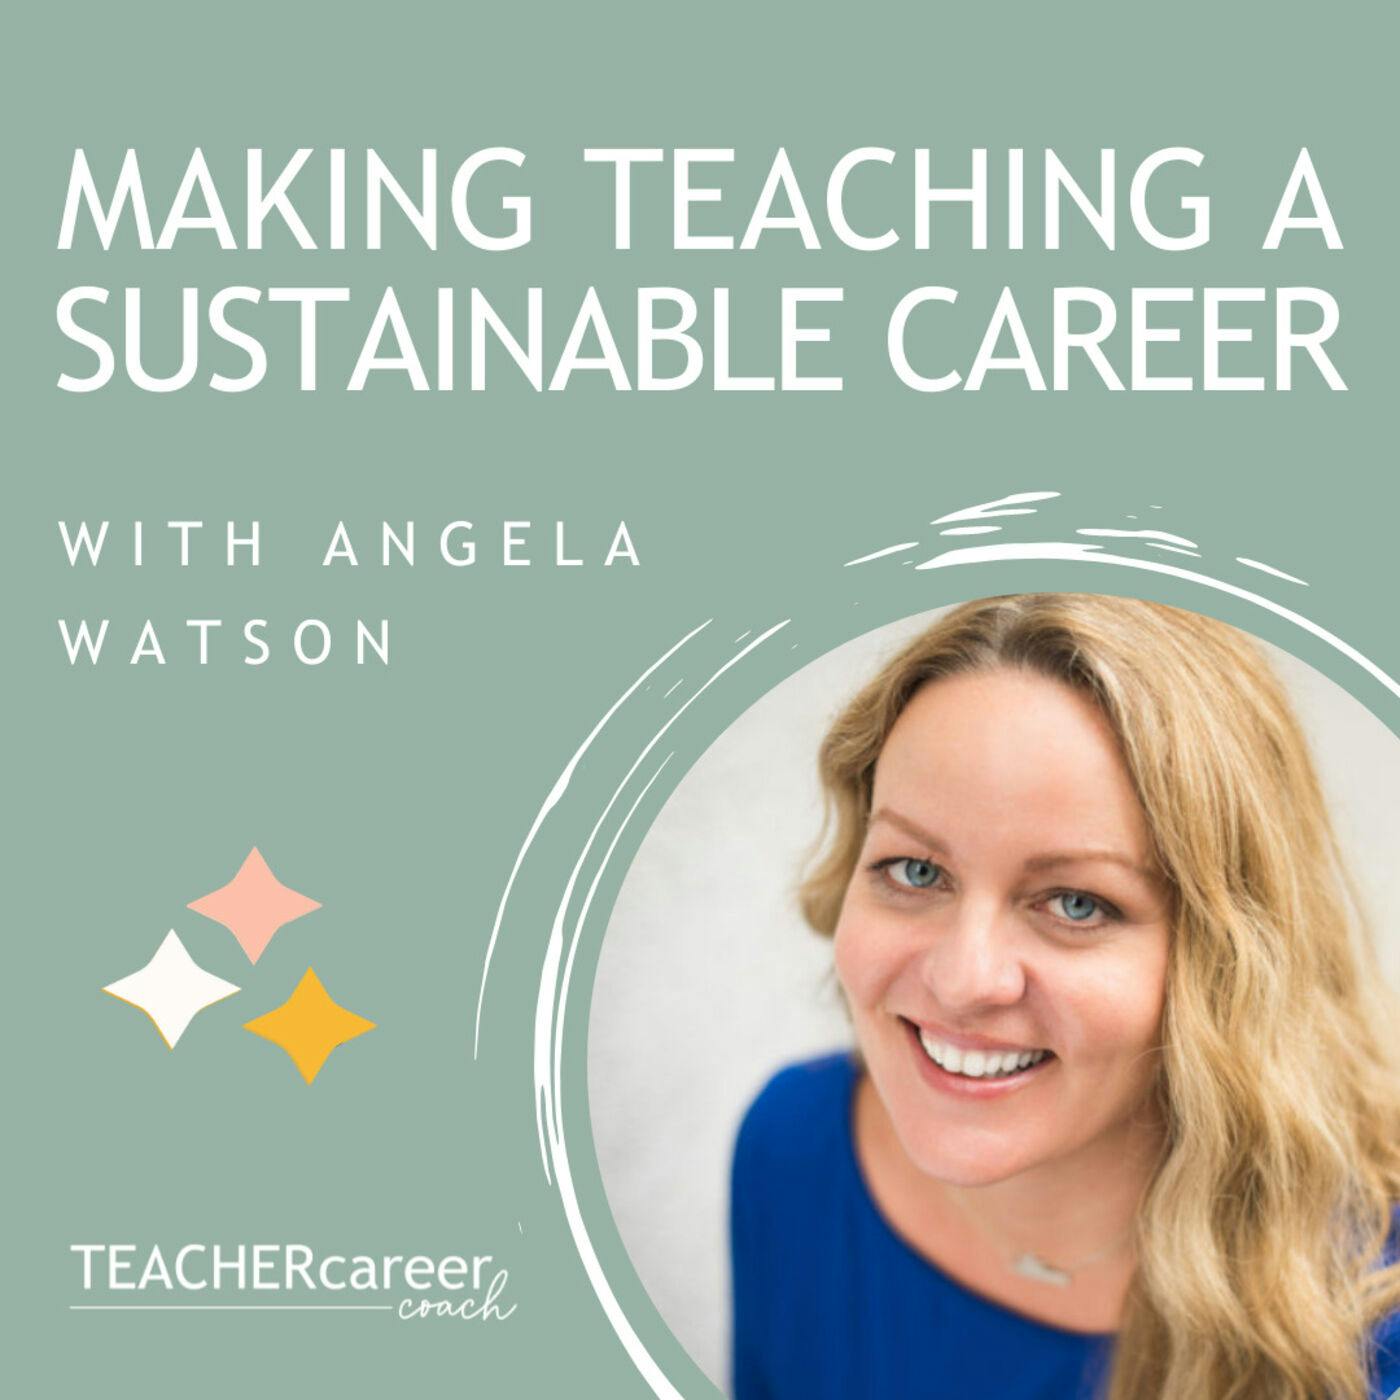 30 - Angela Watson: Making Teaching a Sustainable Career